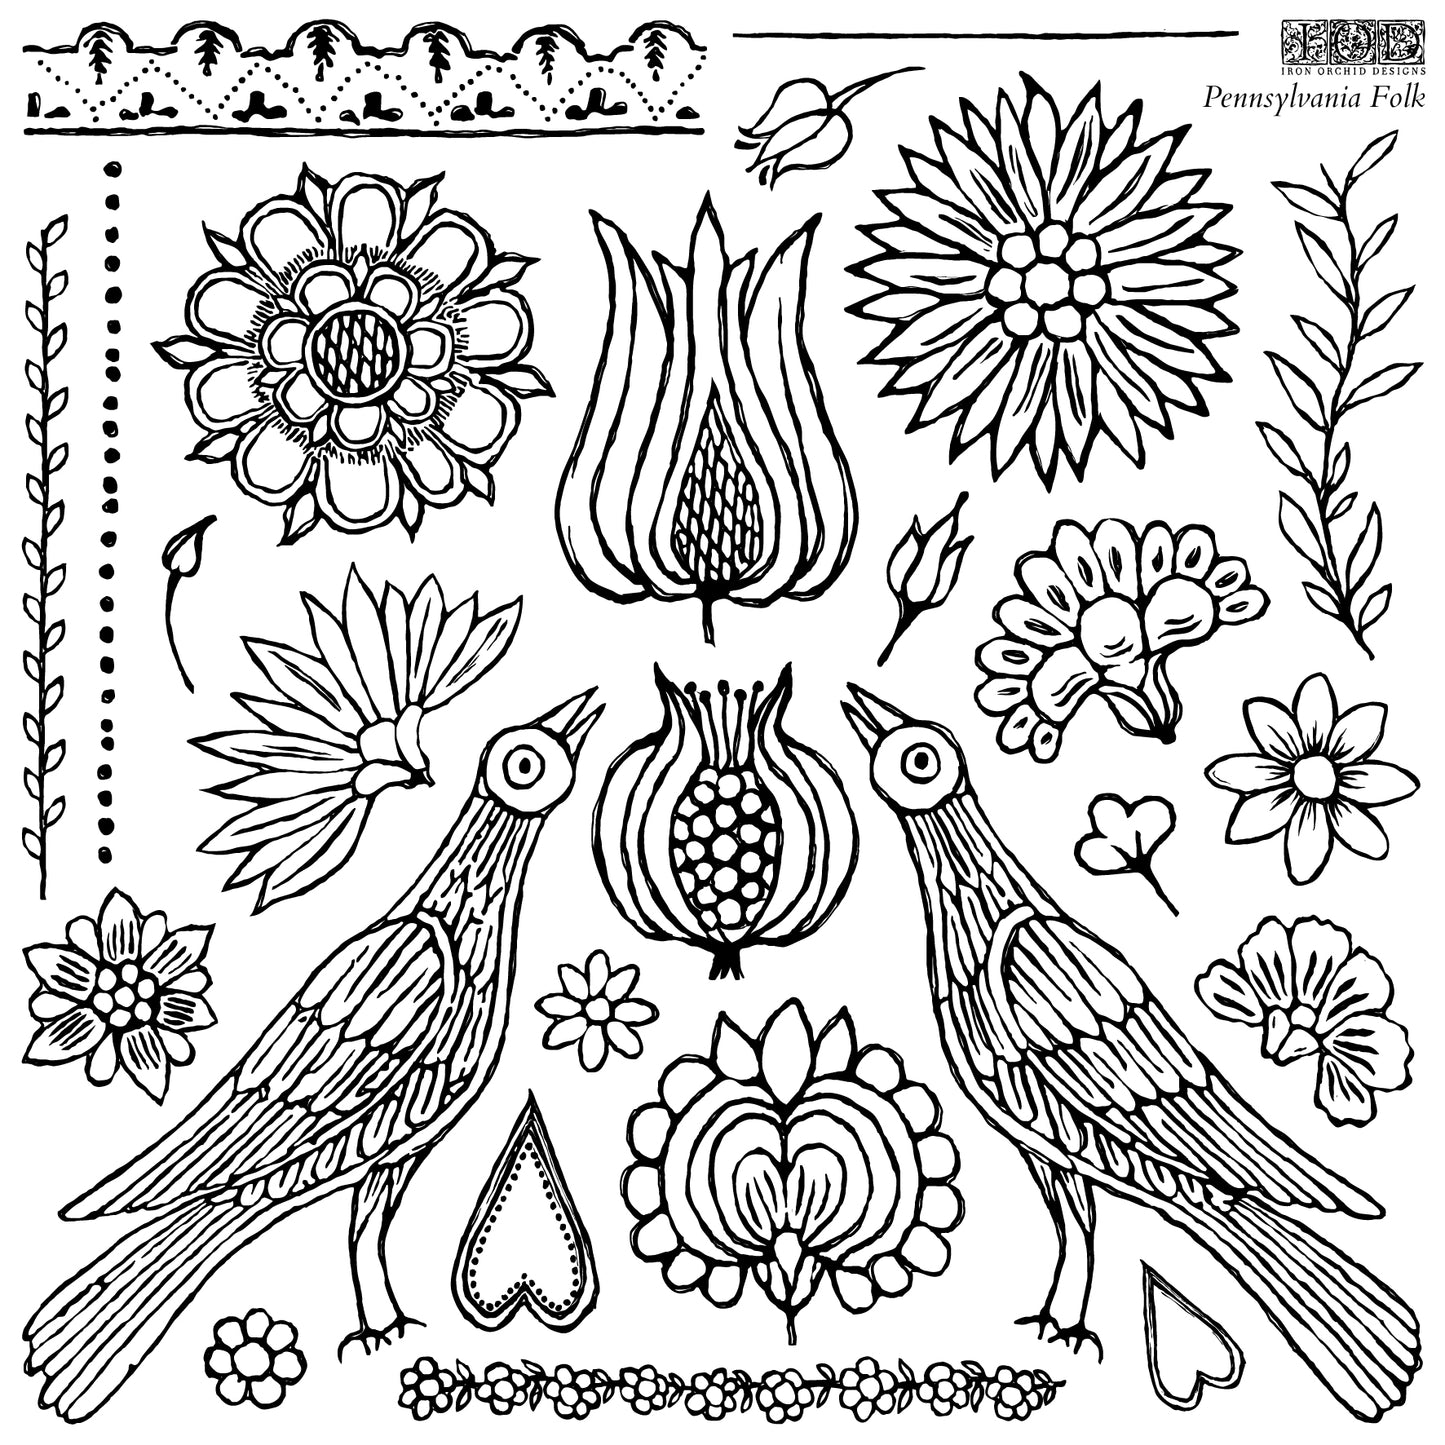 Pennsylvania Folk Iron Orchid Designs Stamp set